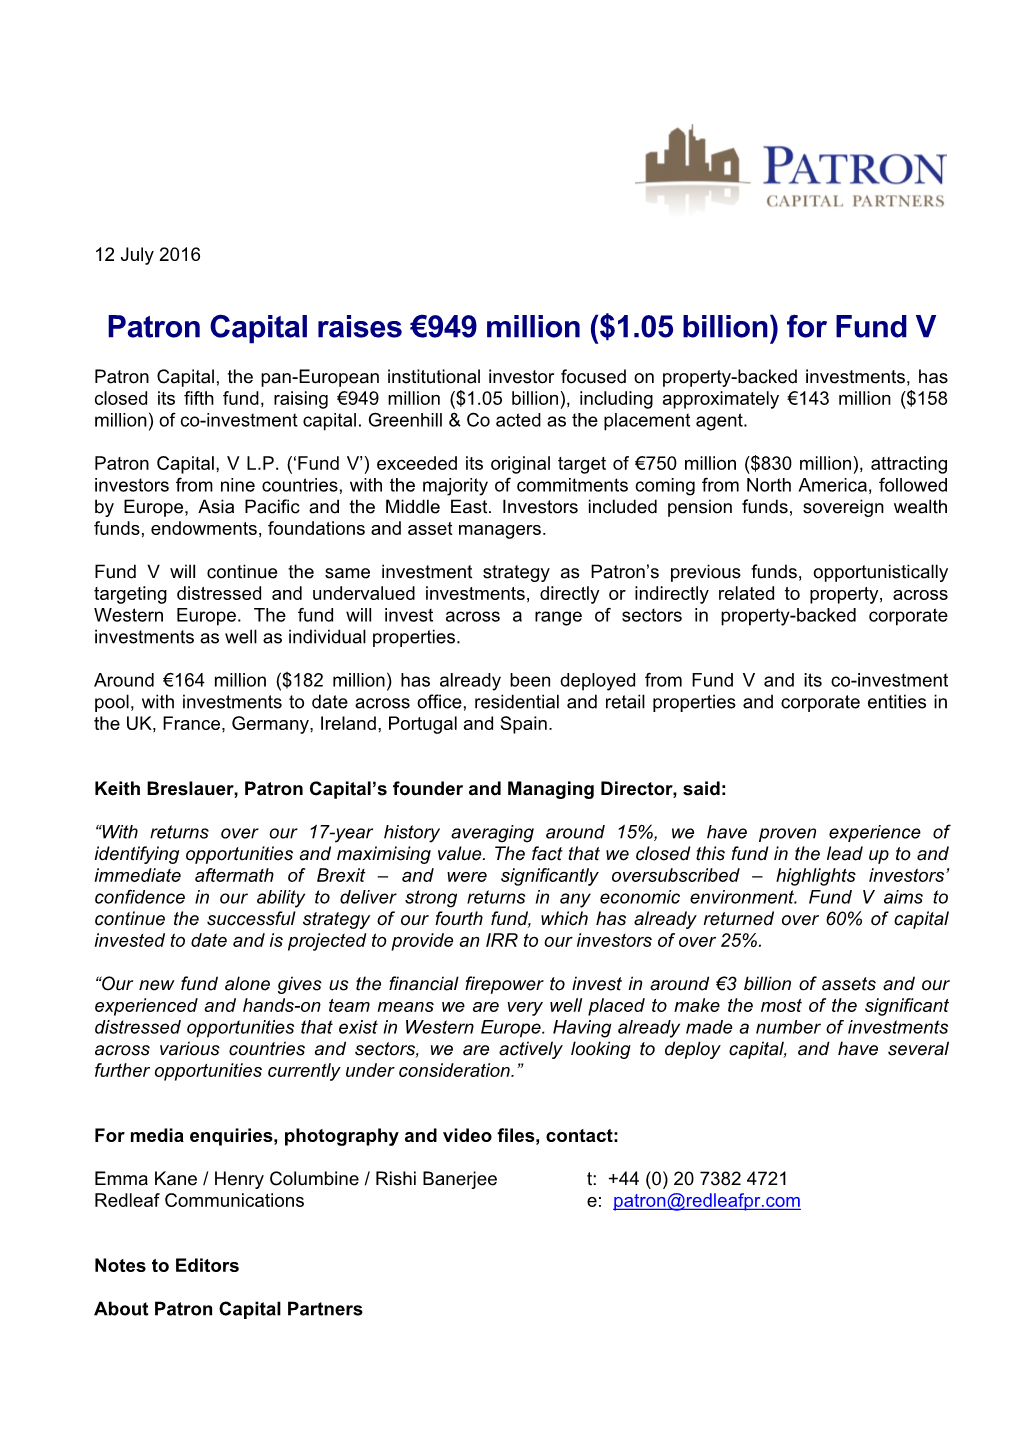 Patron Capital Raises €949 Million ($1.05 Billion) for Fund V